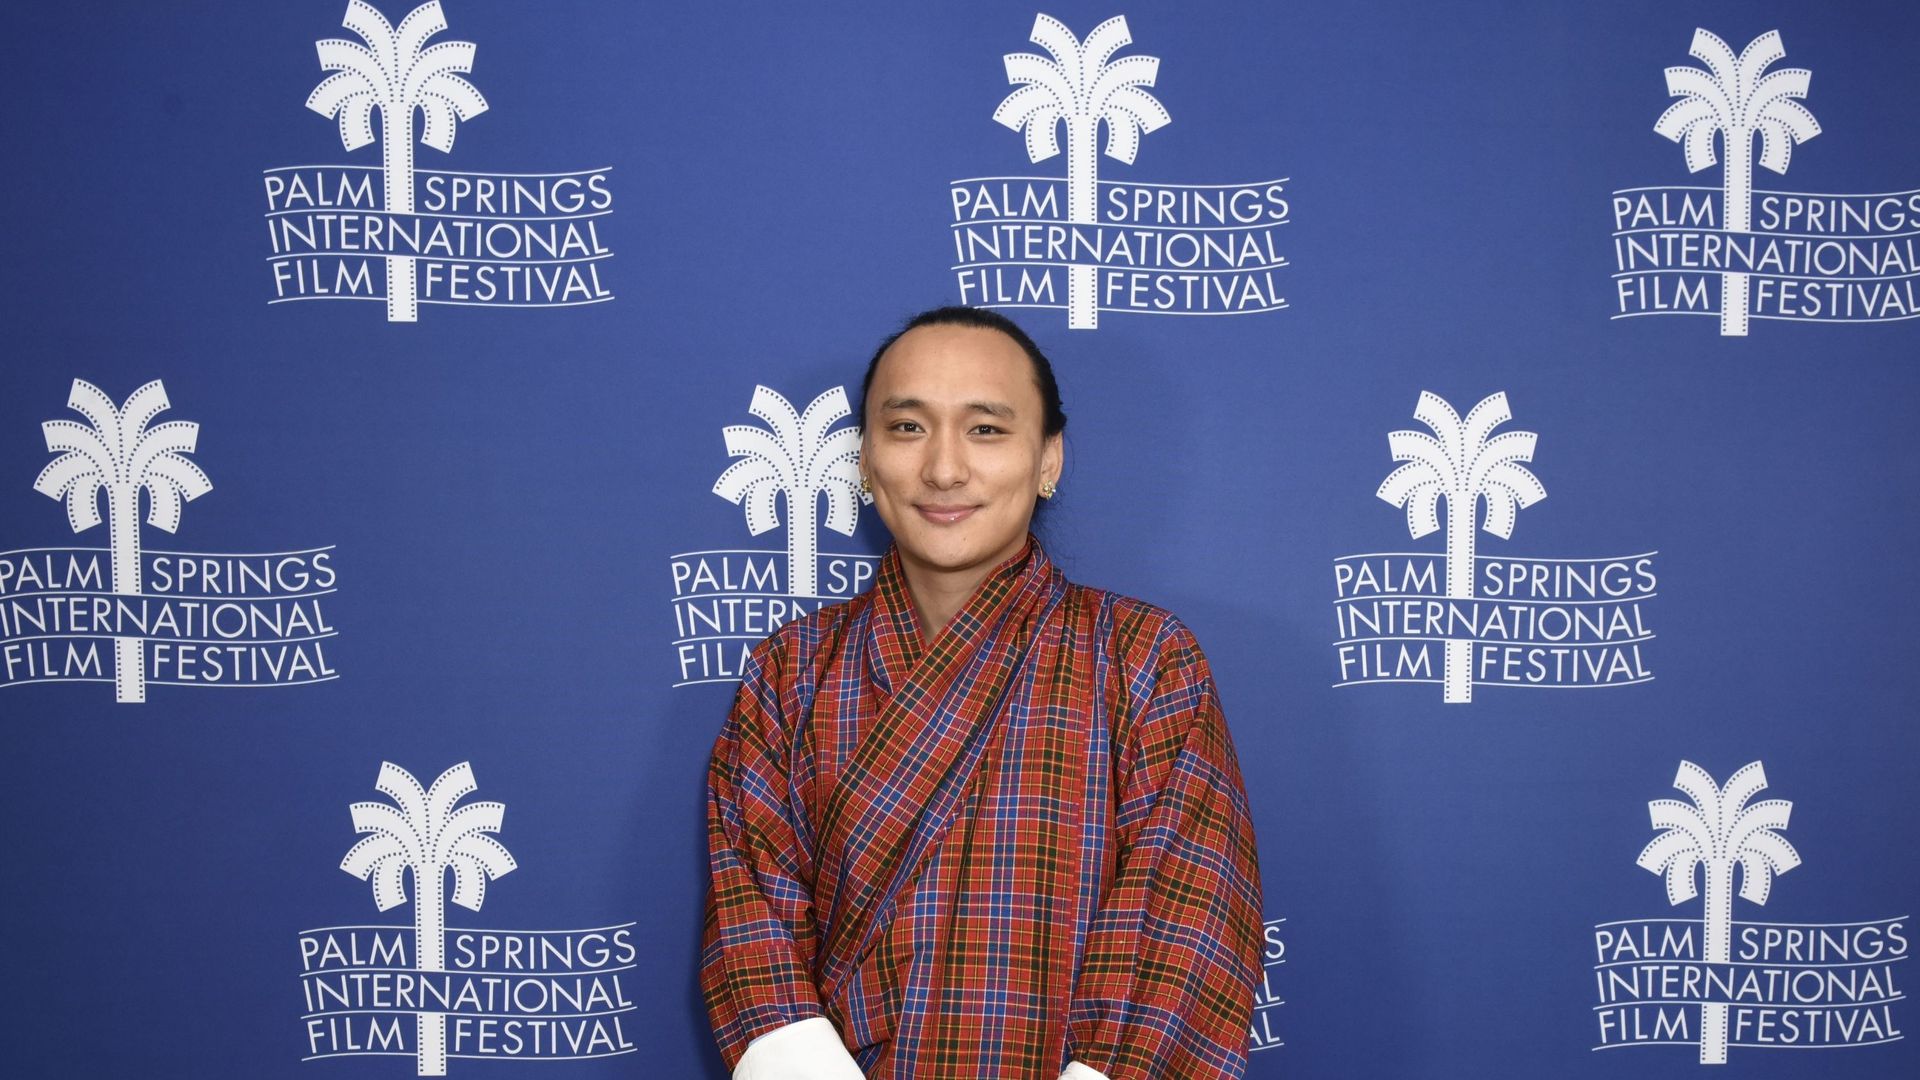 Pawo Choyning Dorji assiste au 31e Festival international du film de Palm Springs le 11 janvier 2020 à Palm Springs, Californie.